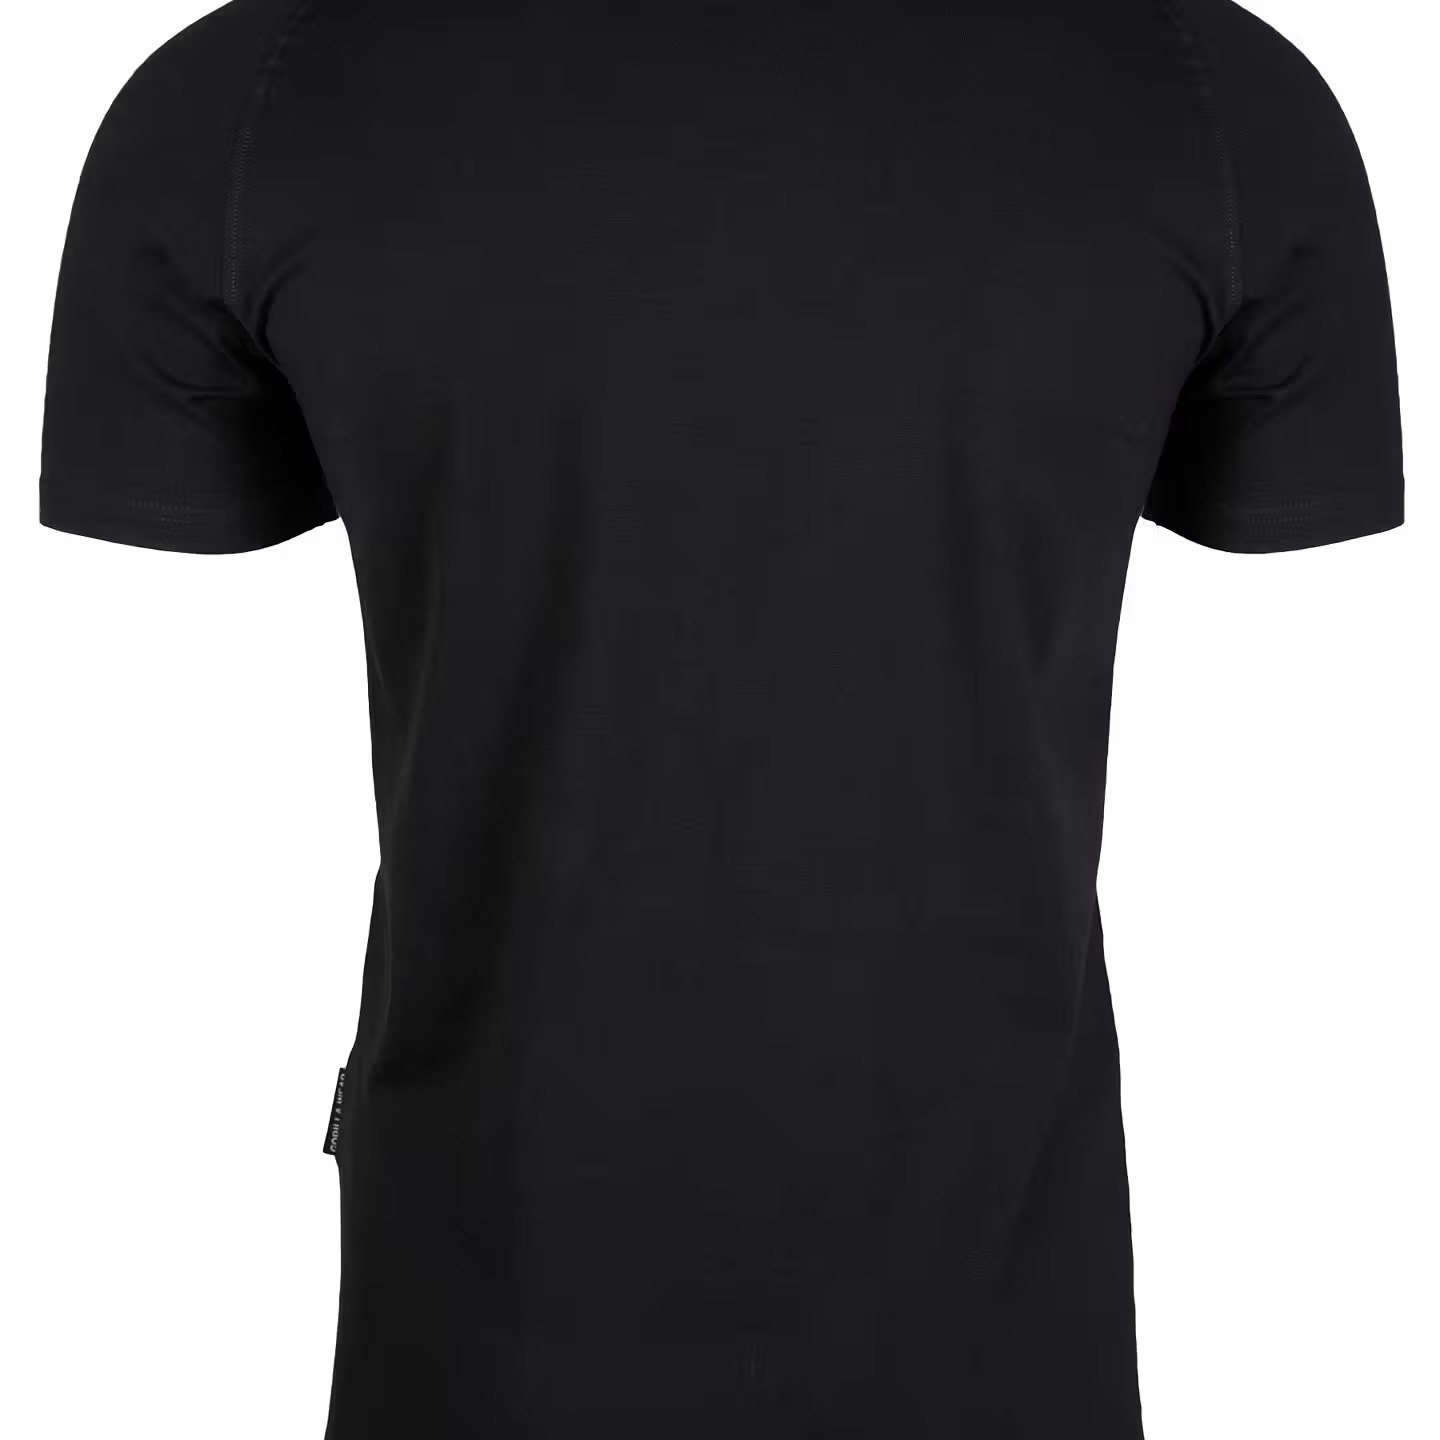 Gorilla wear - Davis T-shirt, black